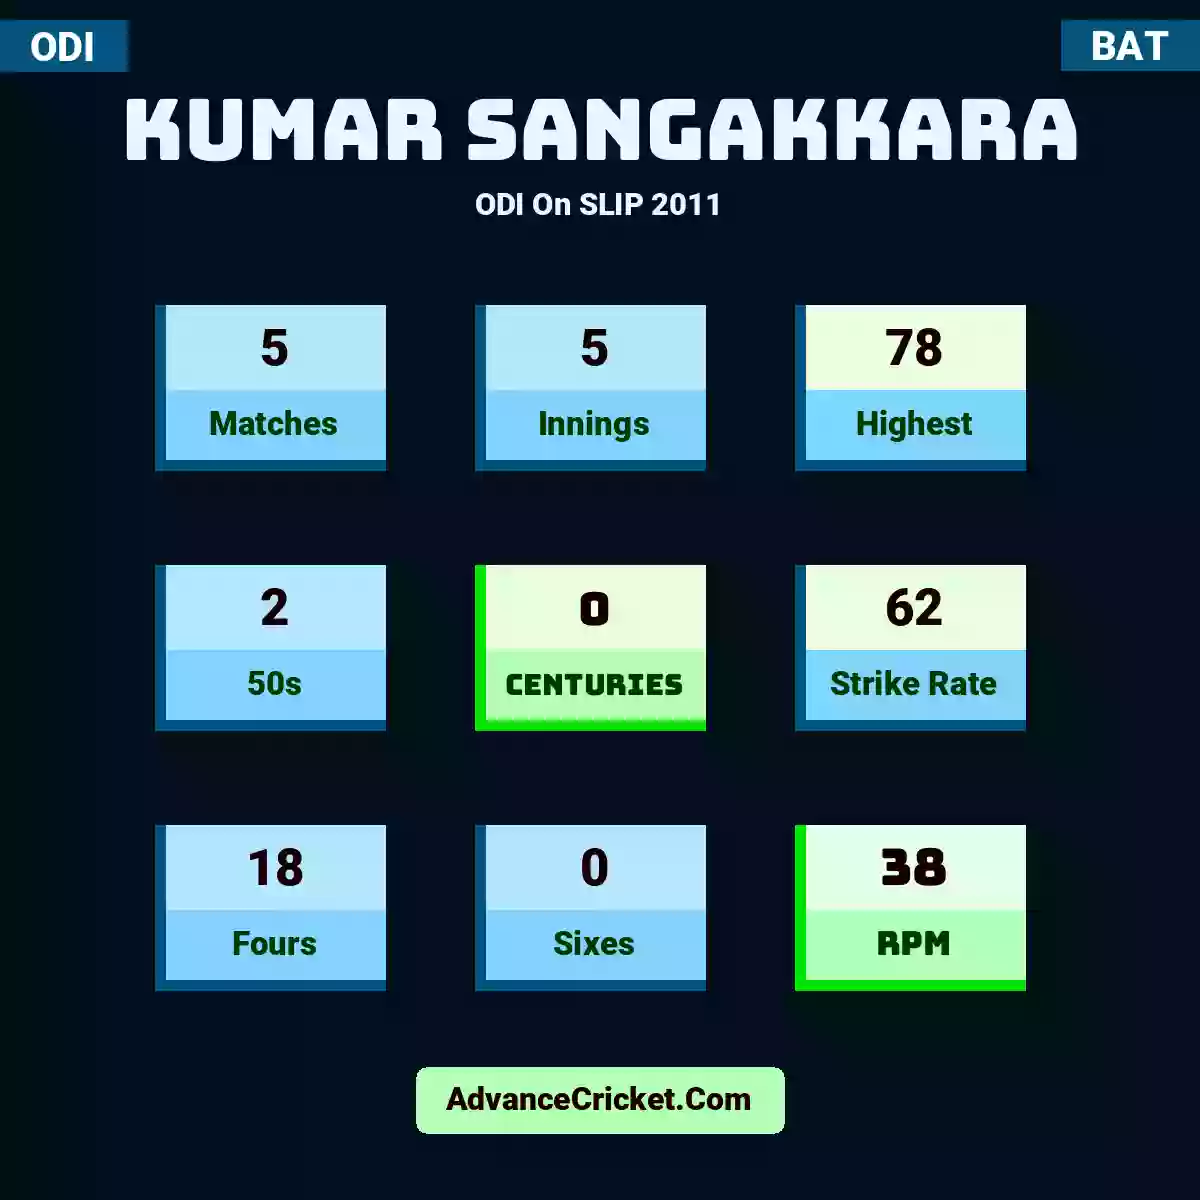 Kumar Sangakkara ODI  On SLIP 2011, Kumar Sangakkara played 5 matches, scored 78 runs as highest, 2 half-centuries, and 0 centuries, with a strike rate of 62. K.Sangakkara hit 18 fours and 0 sixes, with an RPM of 38.